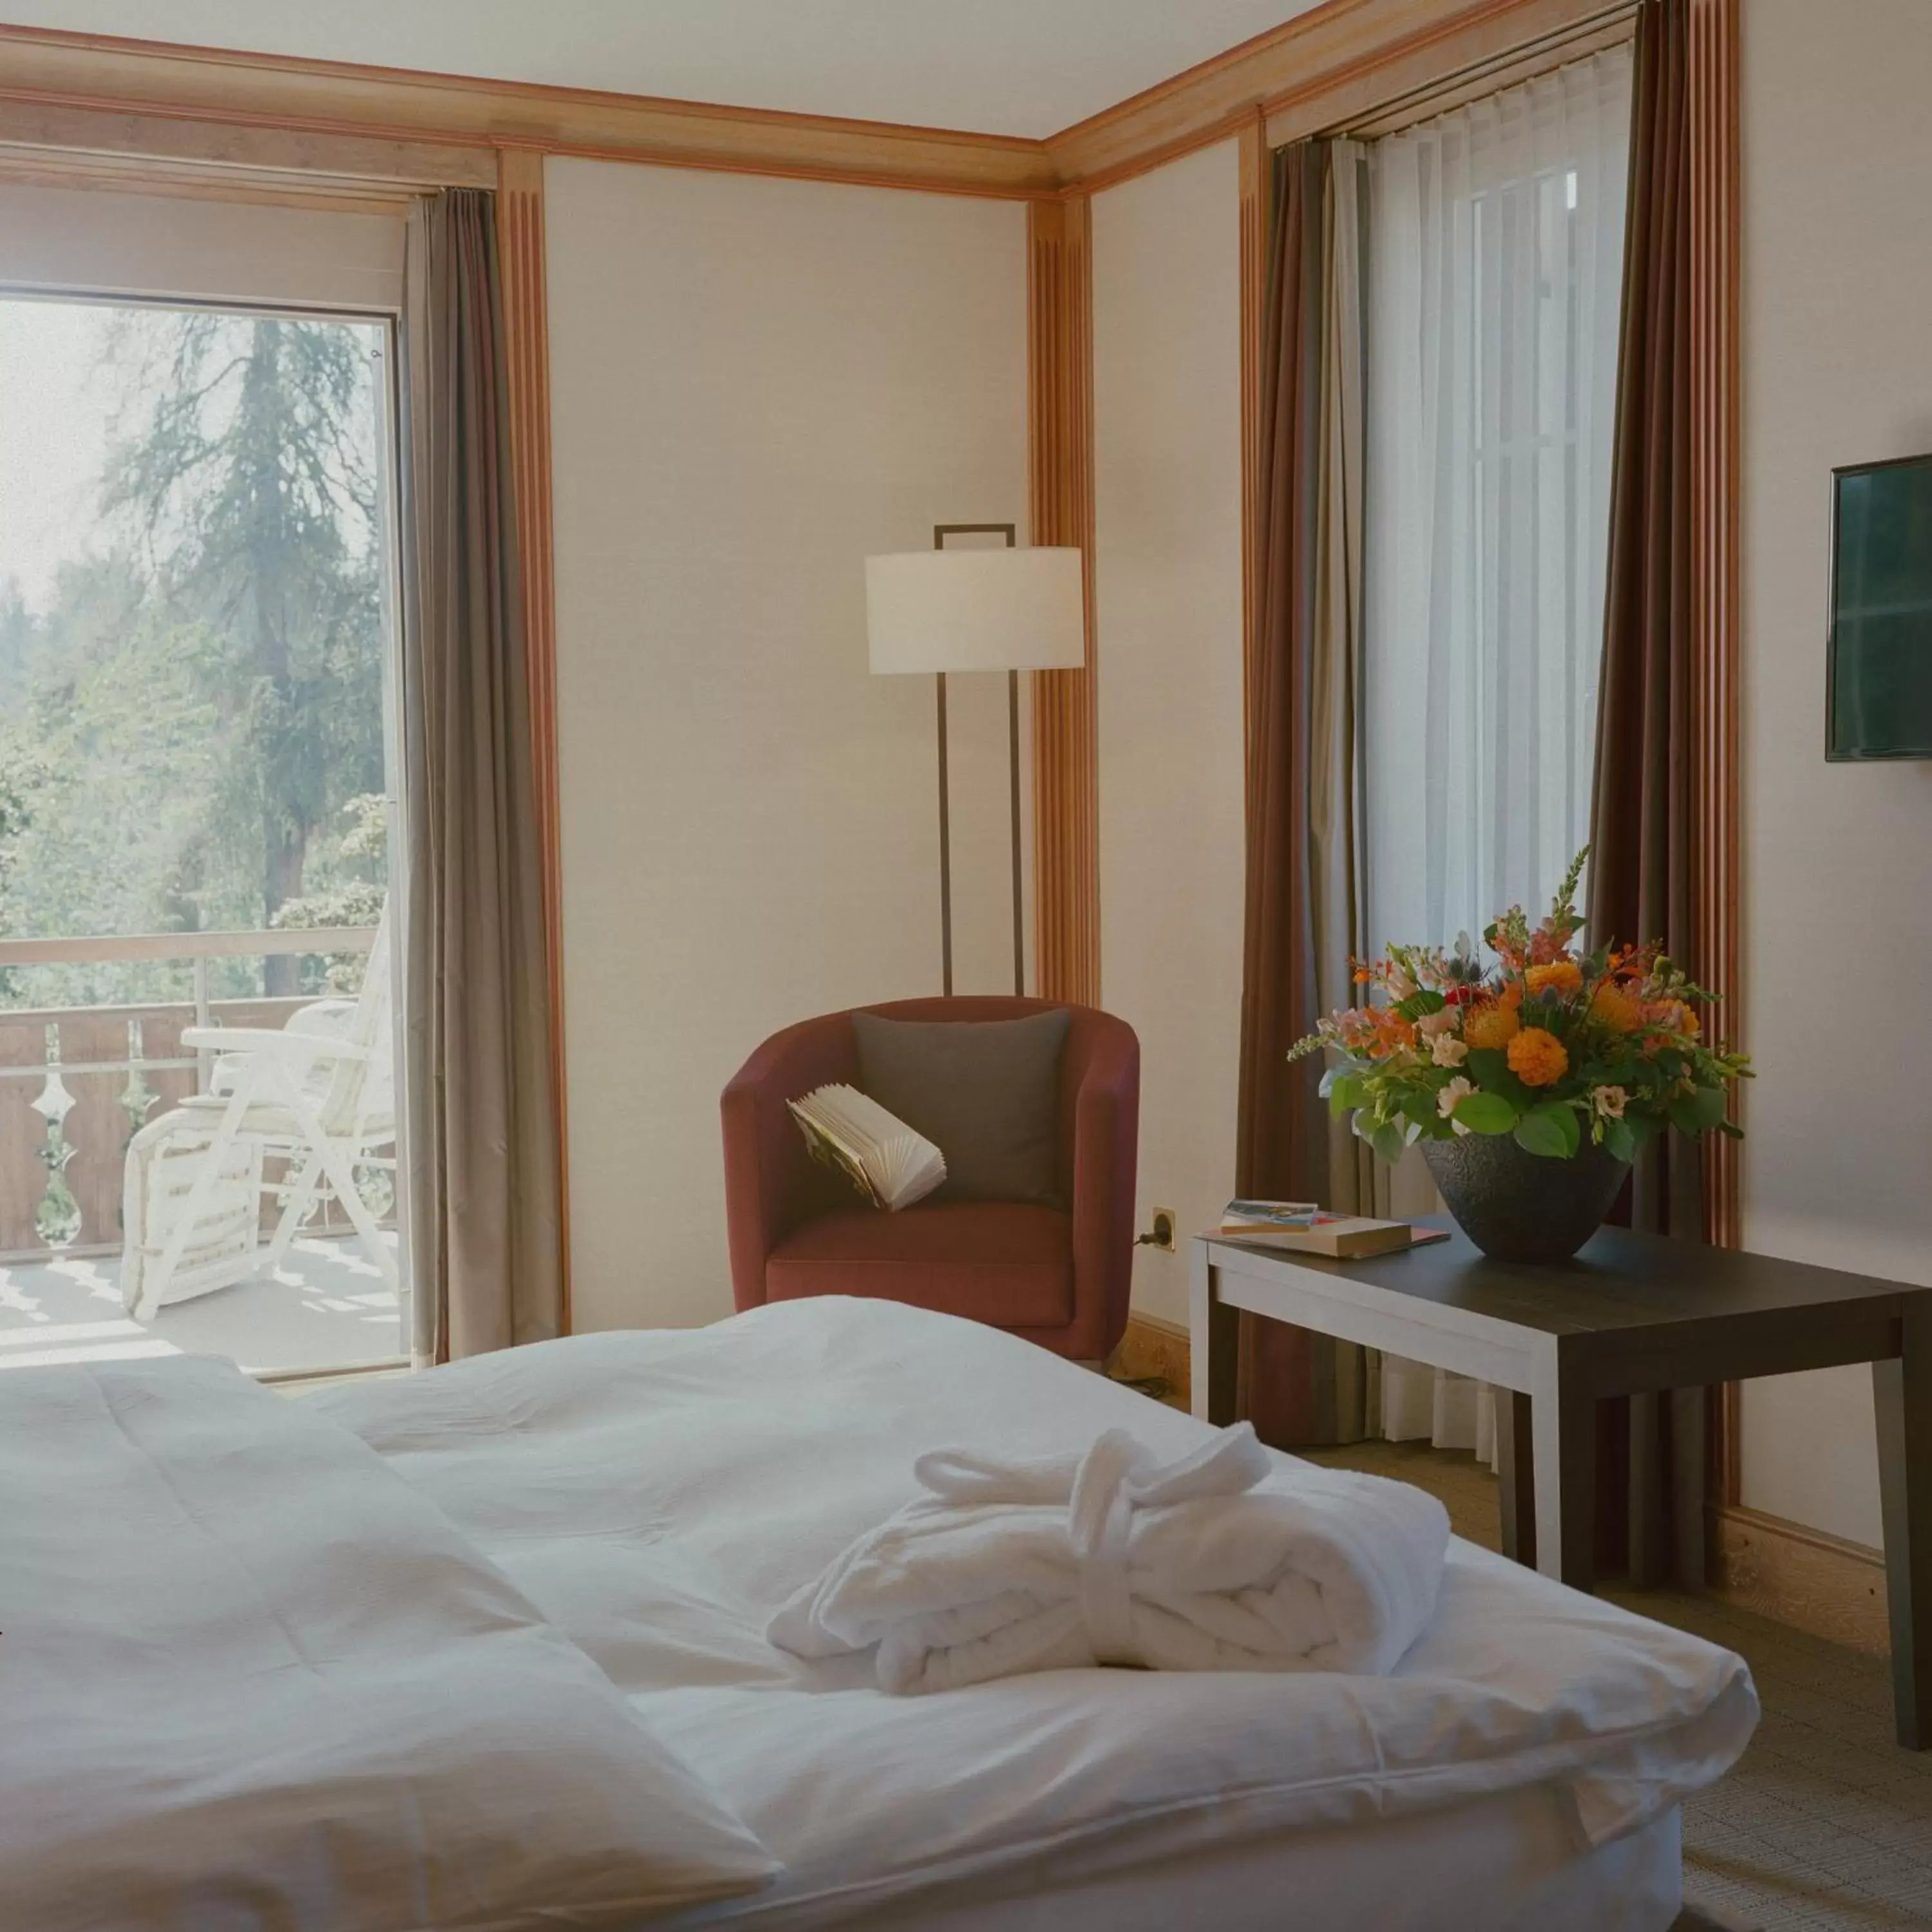 Bed in Hotel Adula